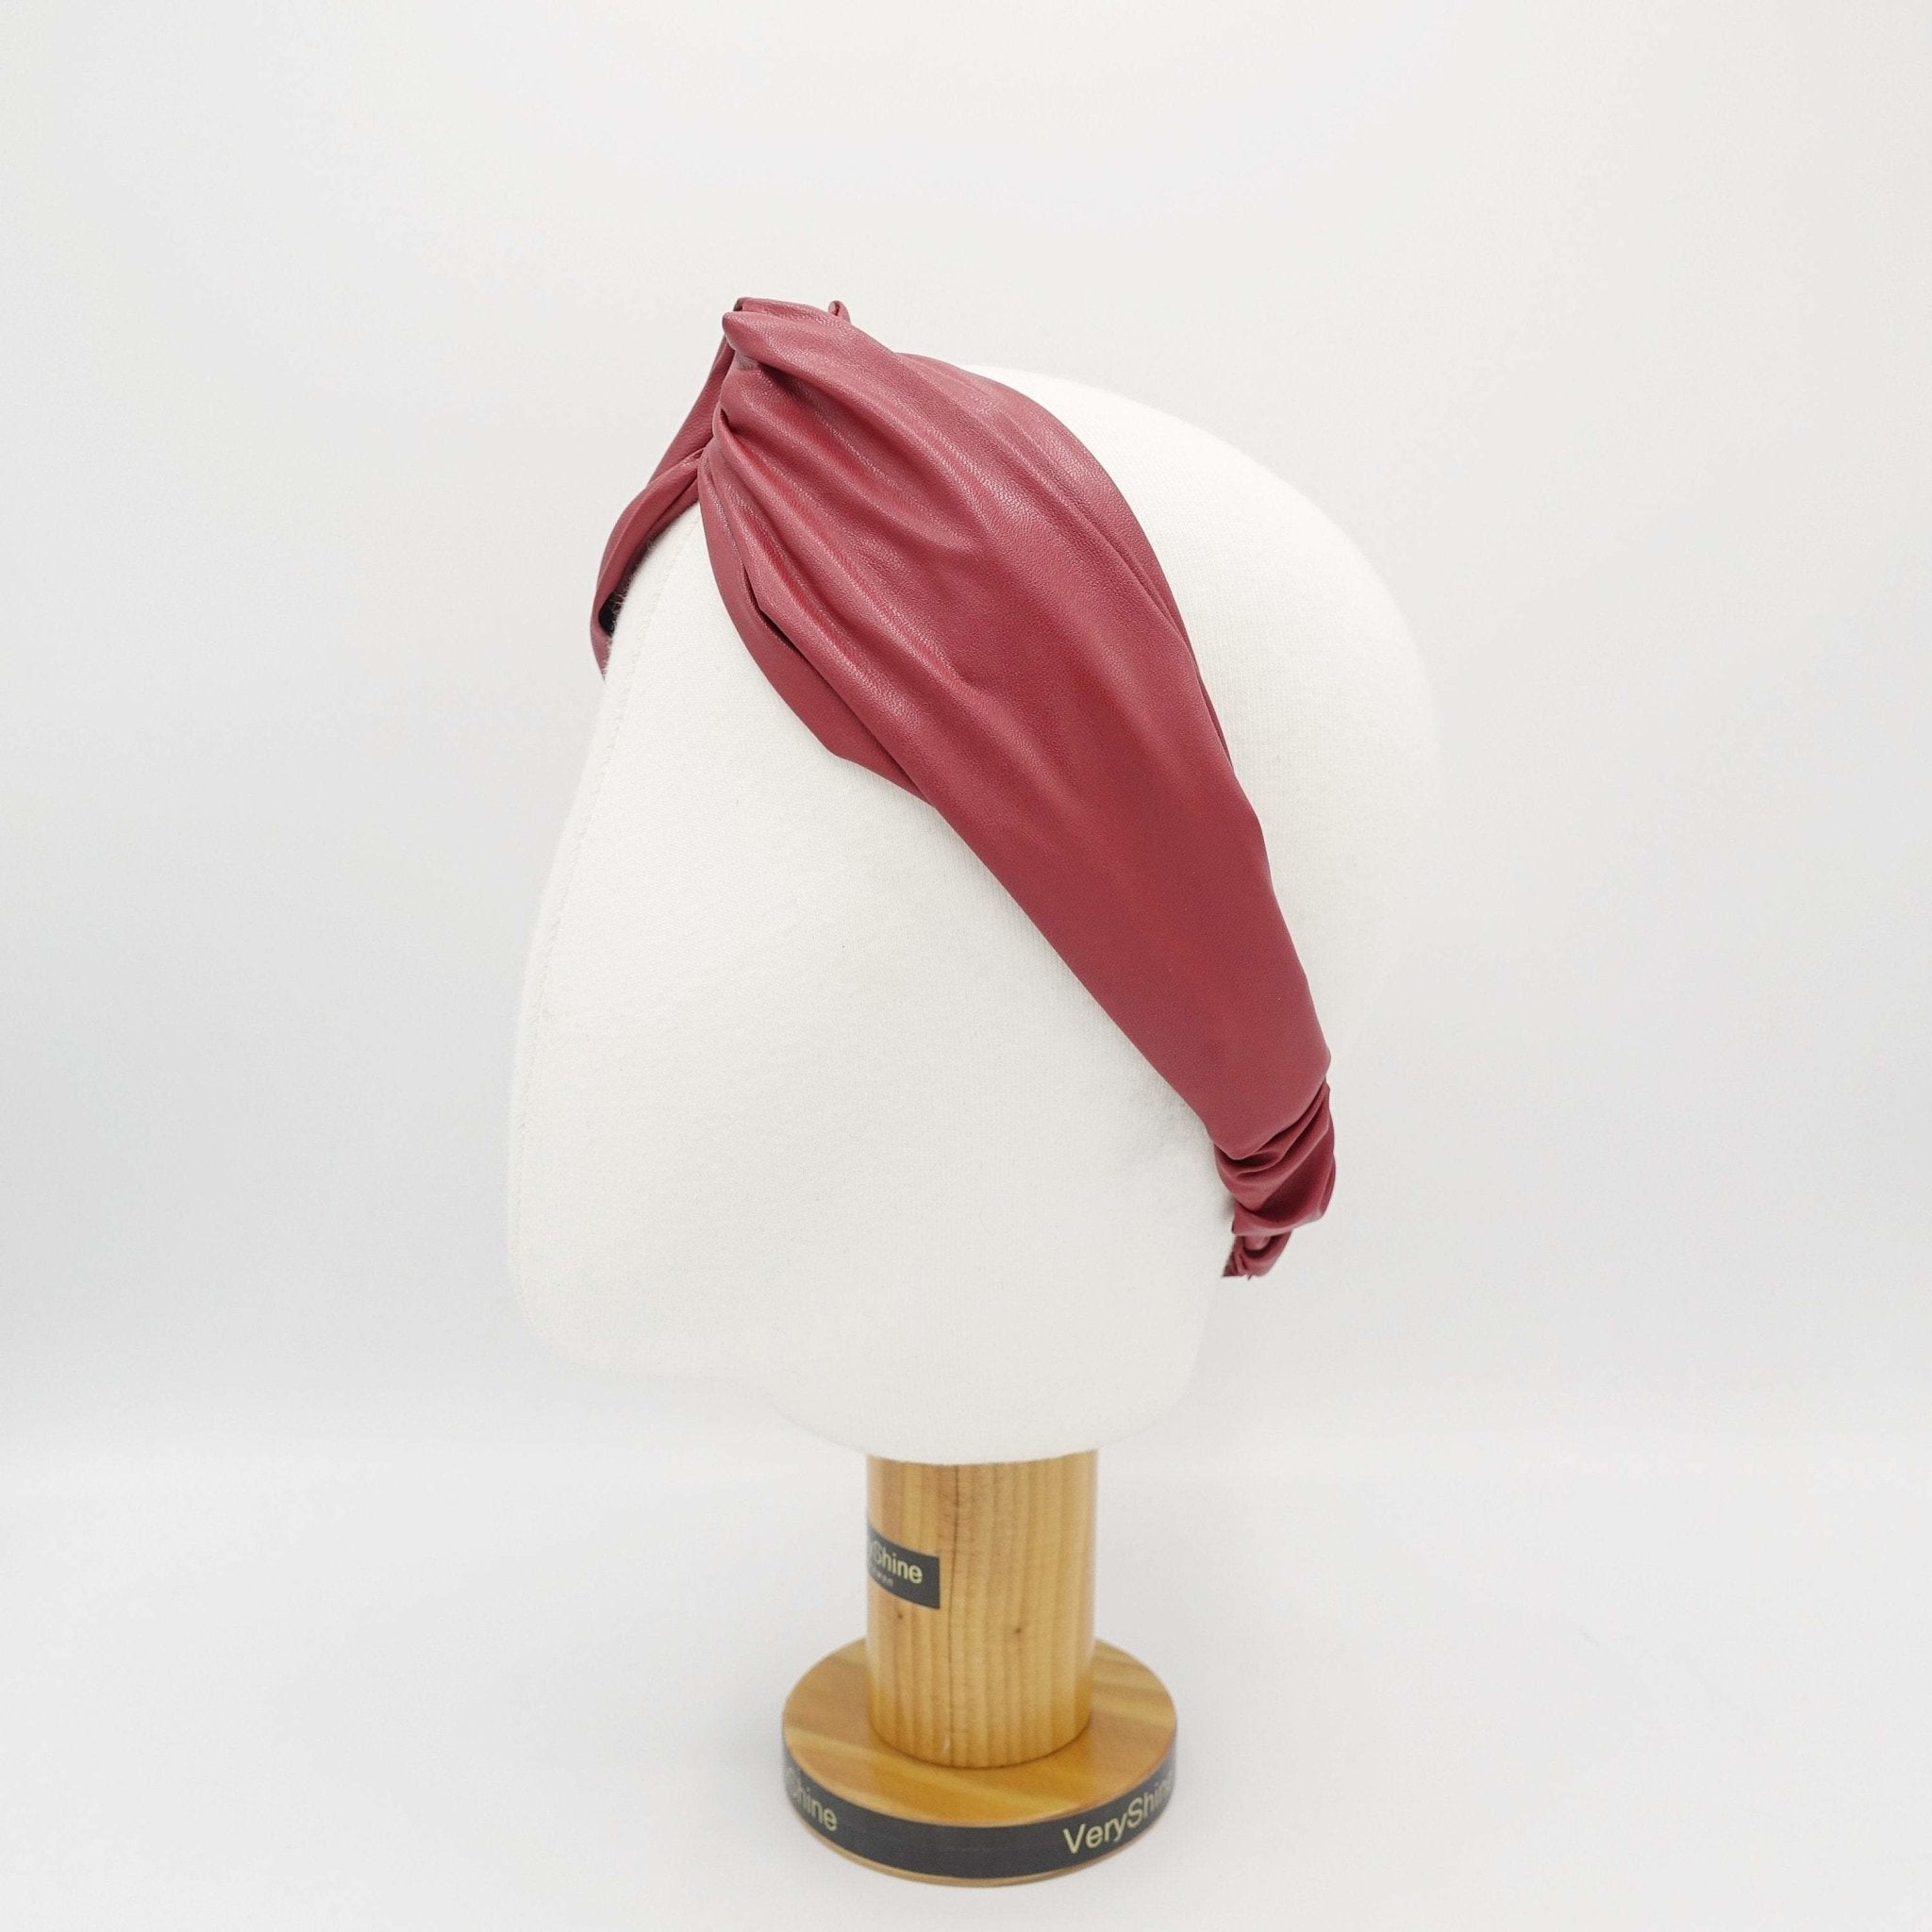 VeryShine hairband/headband Red wine basic leather elastic turban headband